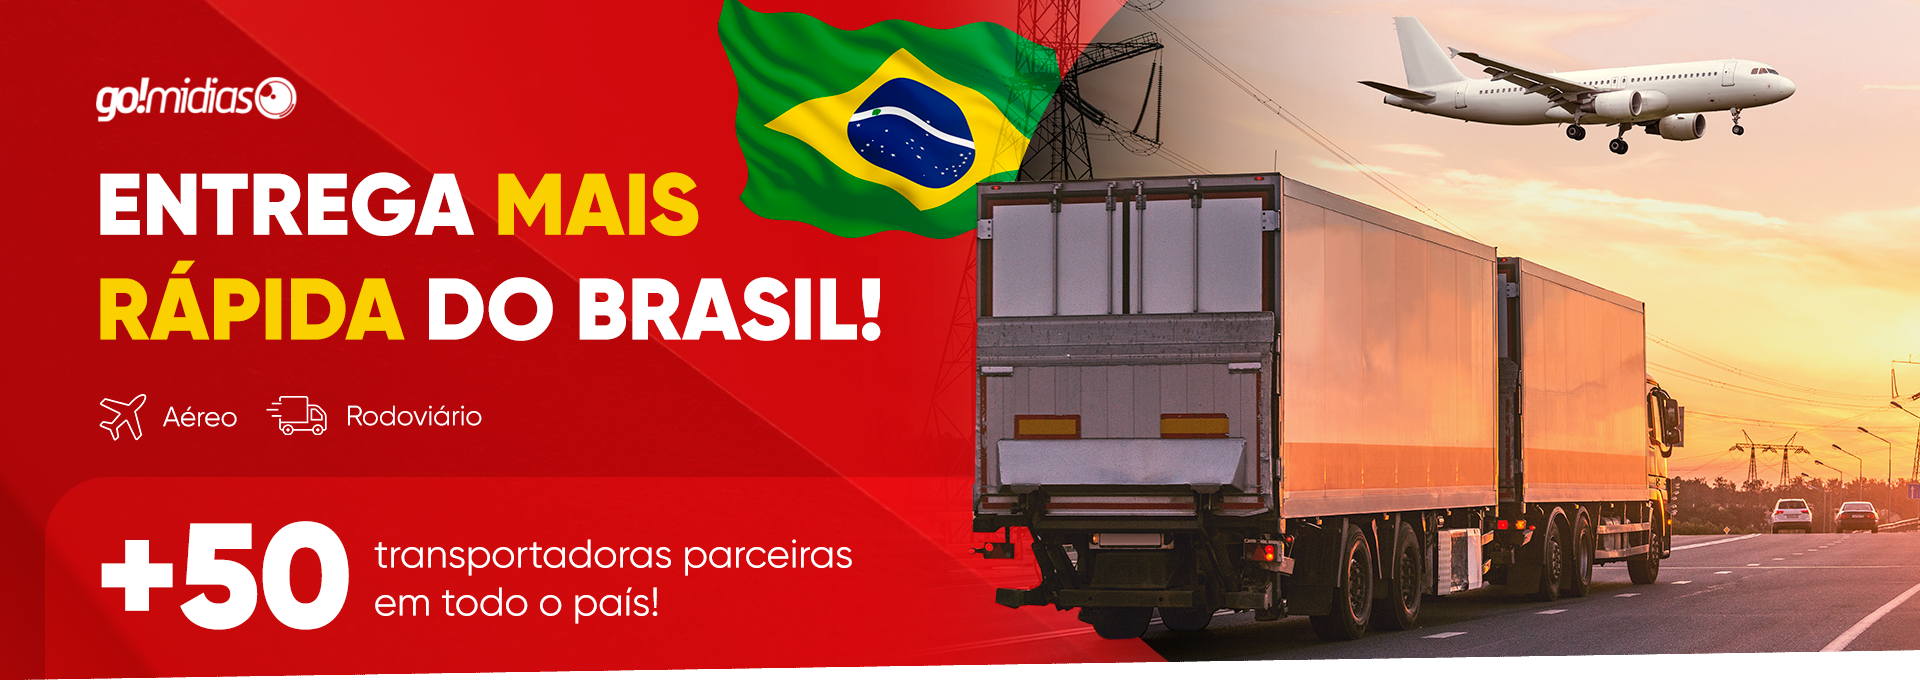 banner-go-midias-entrega-em-todo-brasil